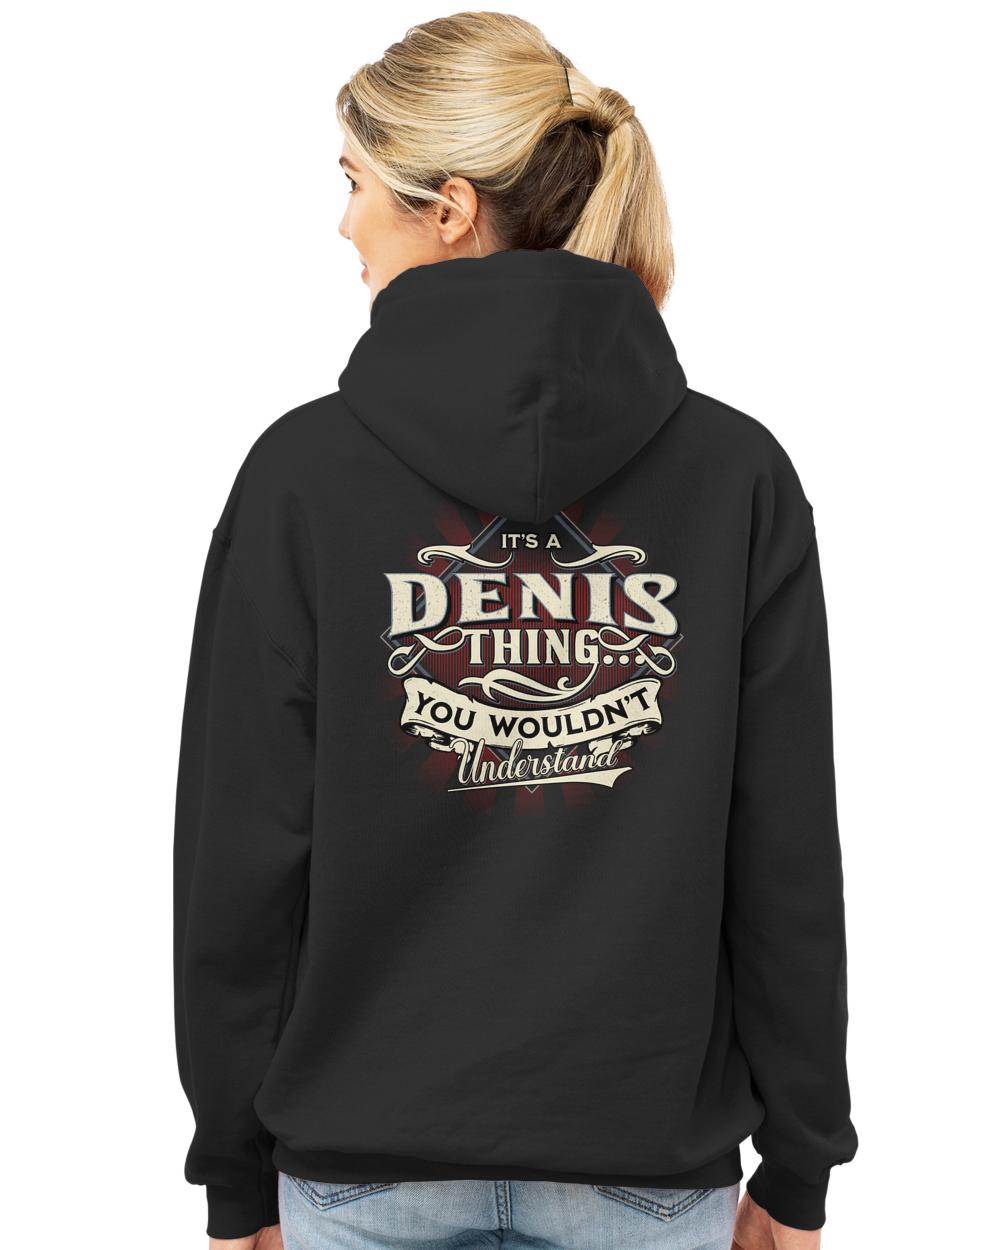 DENIS-13K-44-01